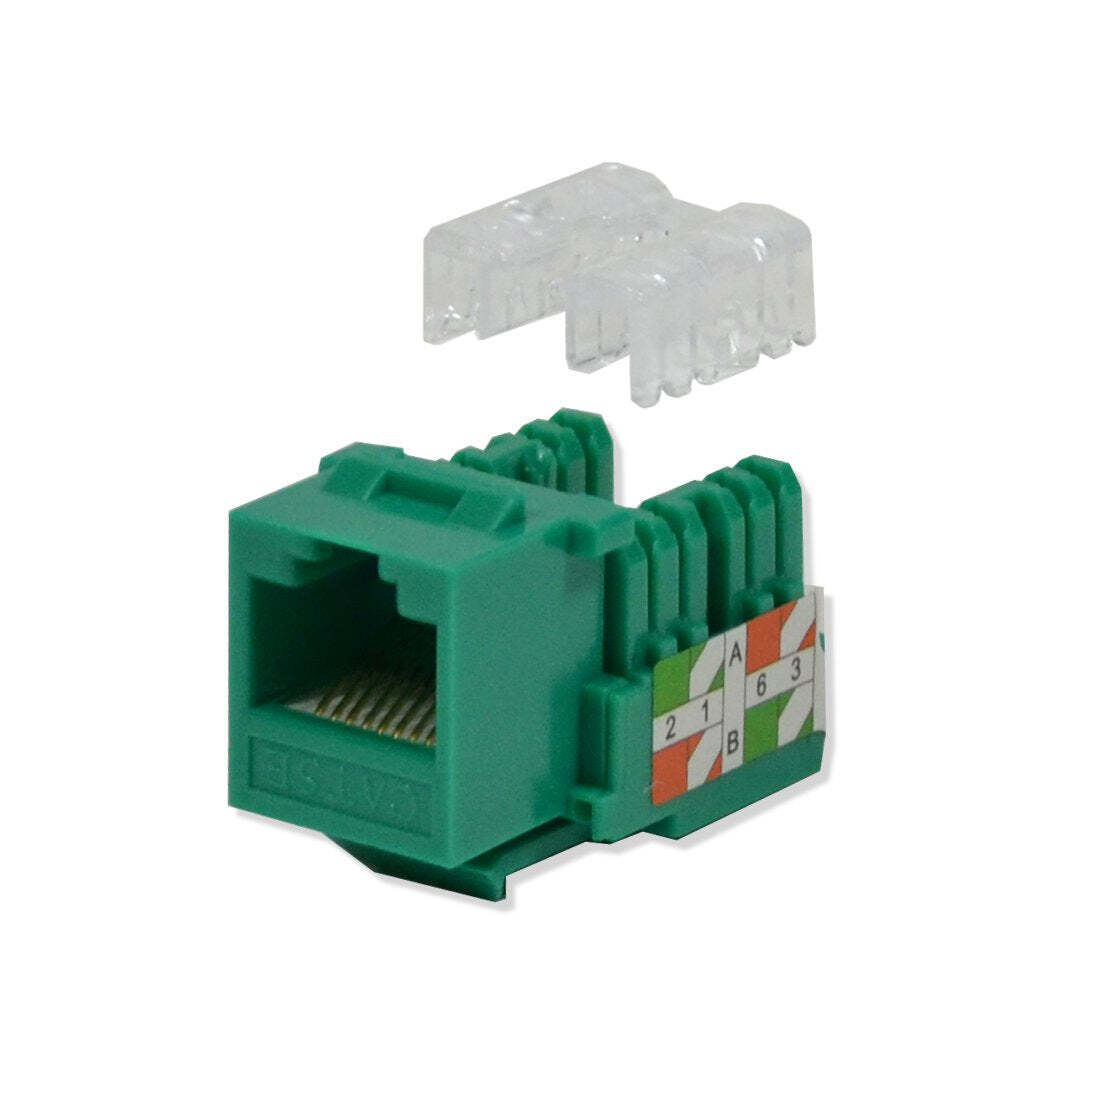 Logico Keystone Jack Cat5e Green Network Ethernet 110 Punchdown 8P8C Wholesale